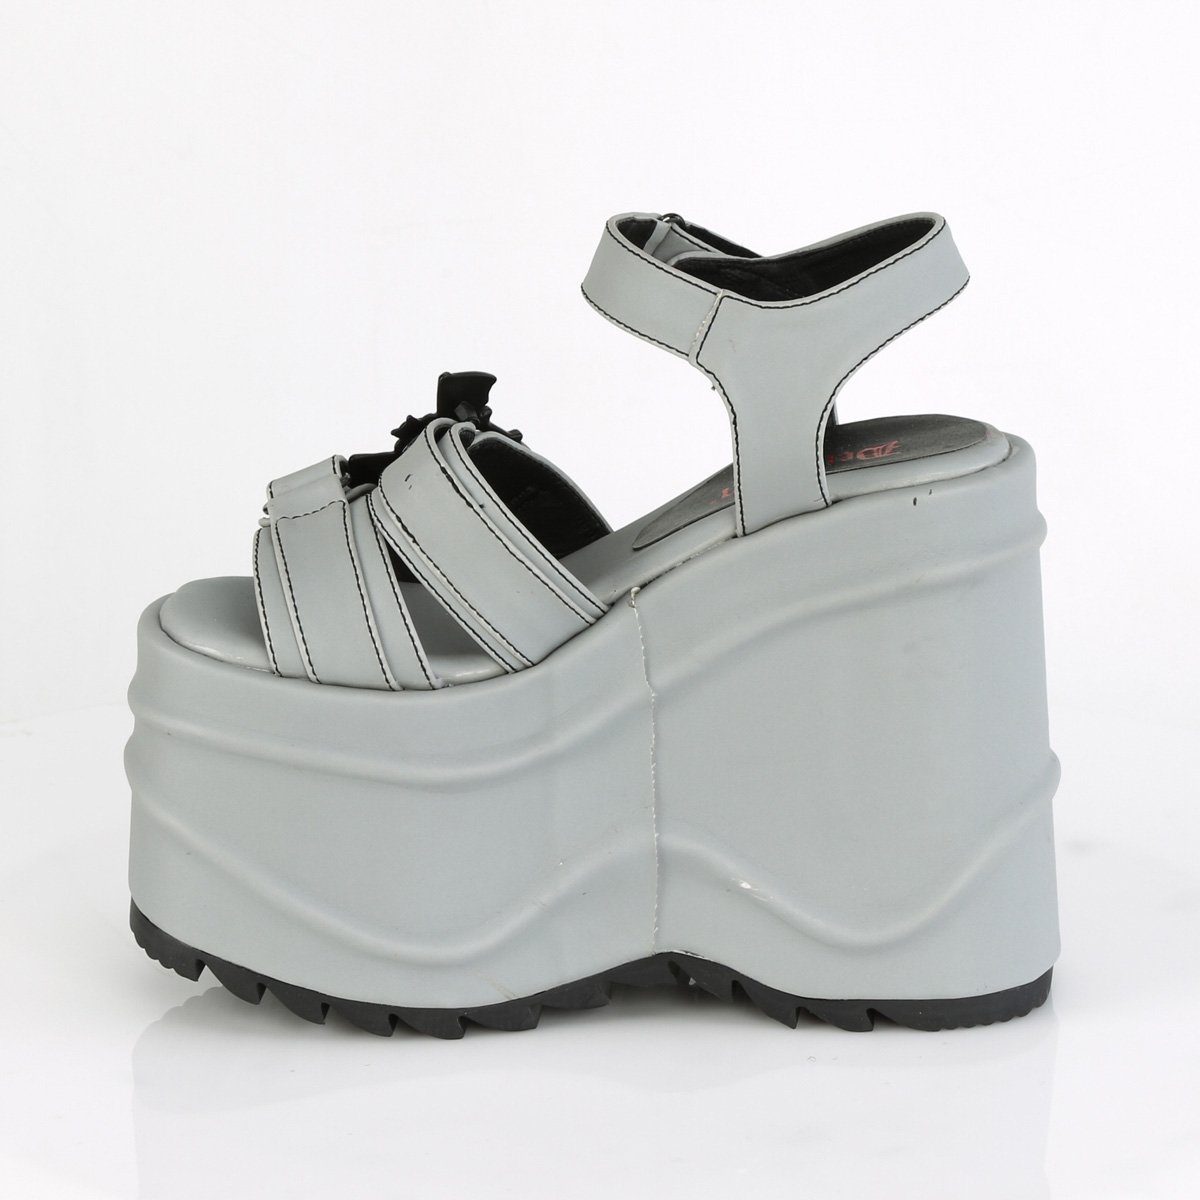 High-Heel-Pumps Boots Grau Neon WAVE-13 Demonia SALE Plateau